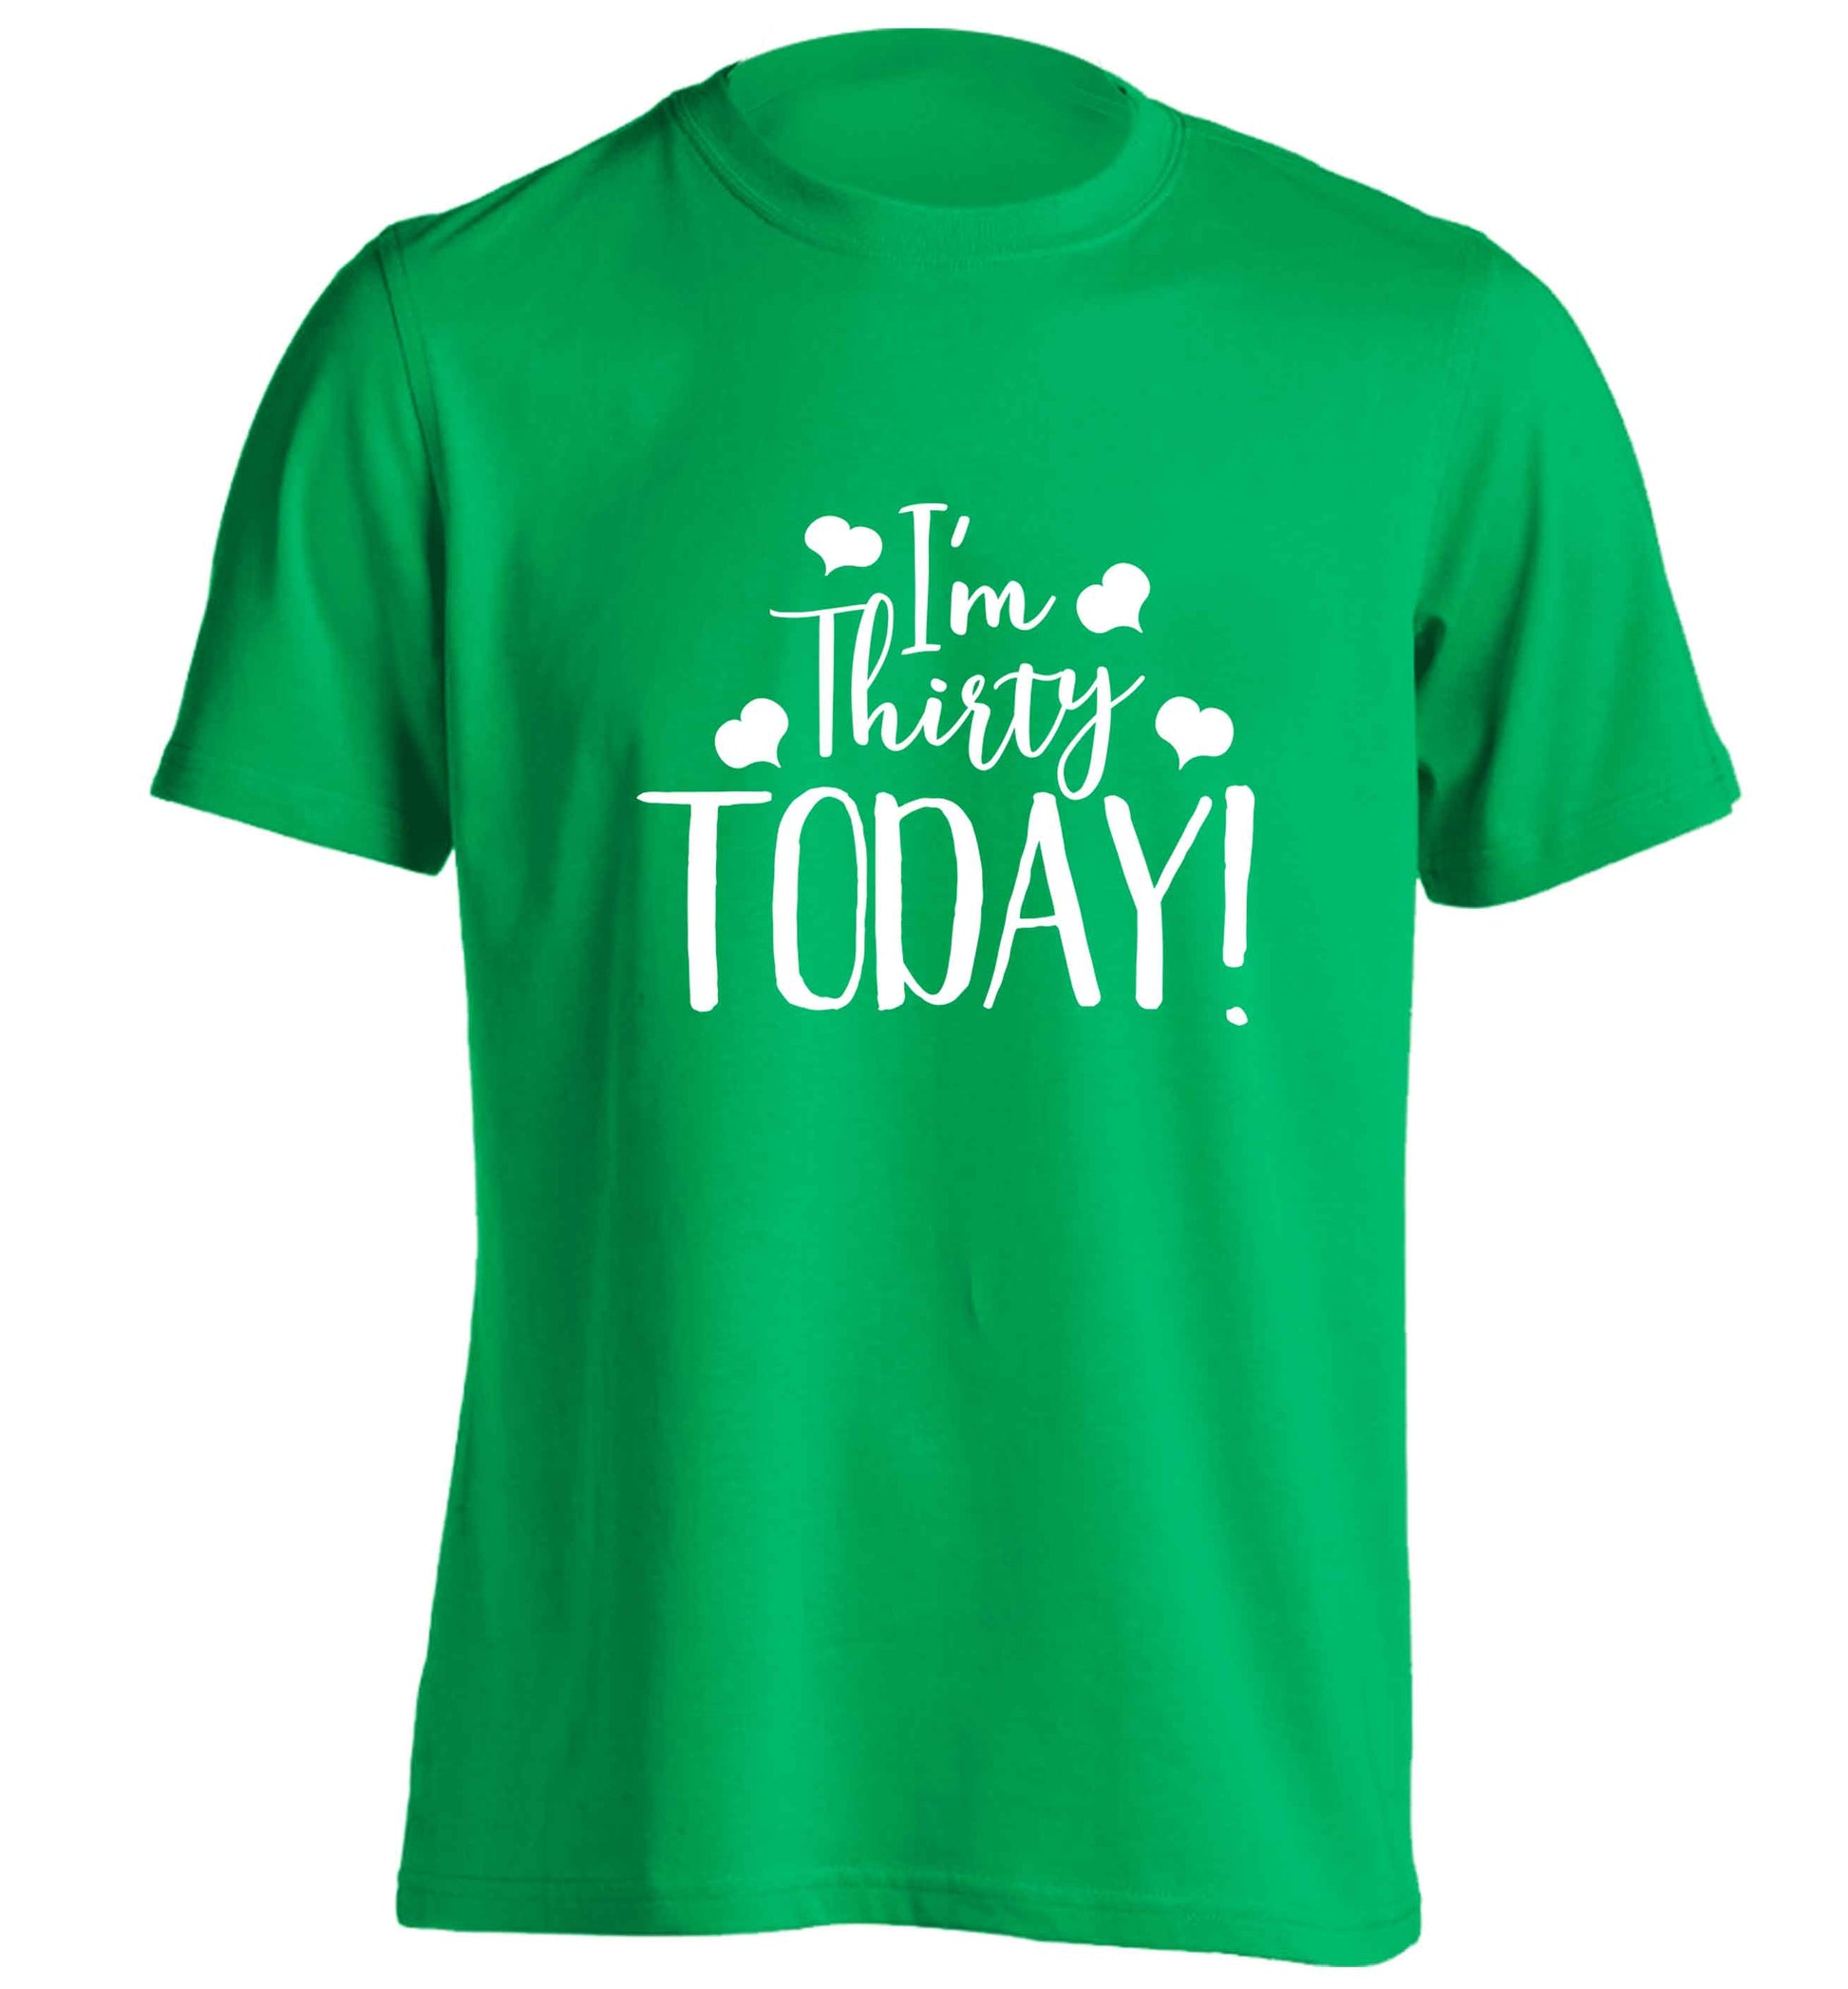 I'm thirty today! adults unisex green Tshirt 2XL